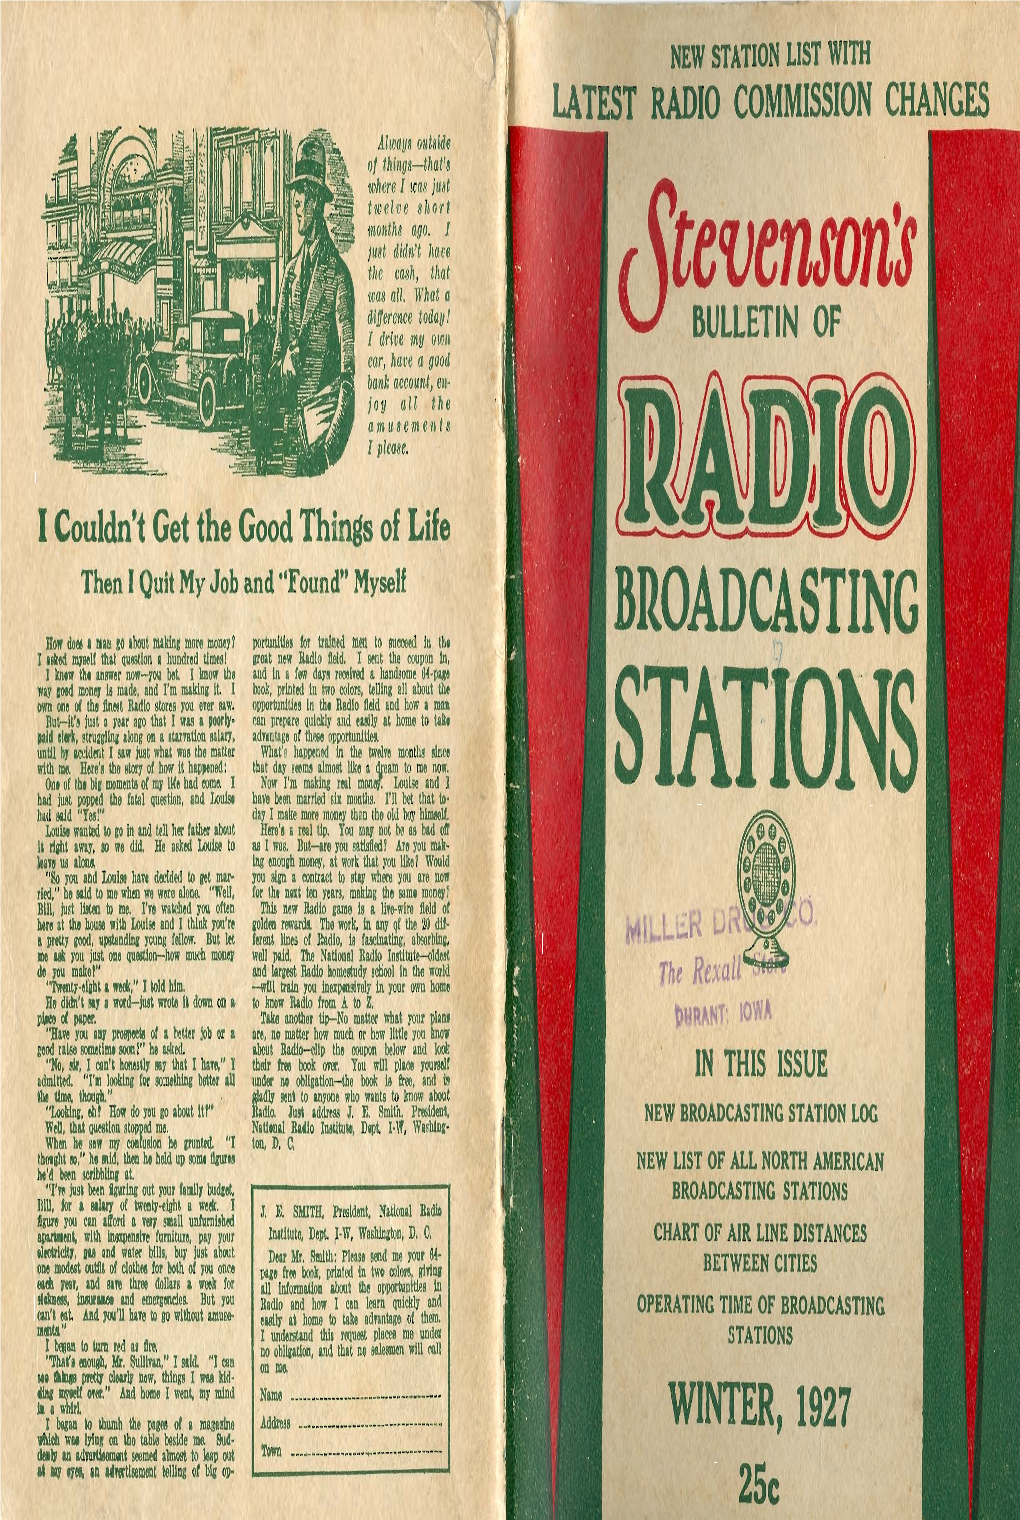 Stevenson's Bulletin of Radio Broadcasting Stations, Winter 1927